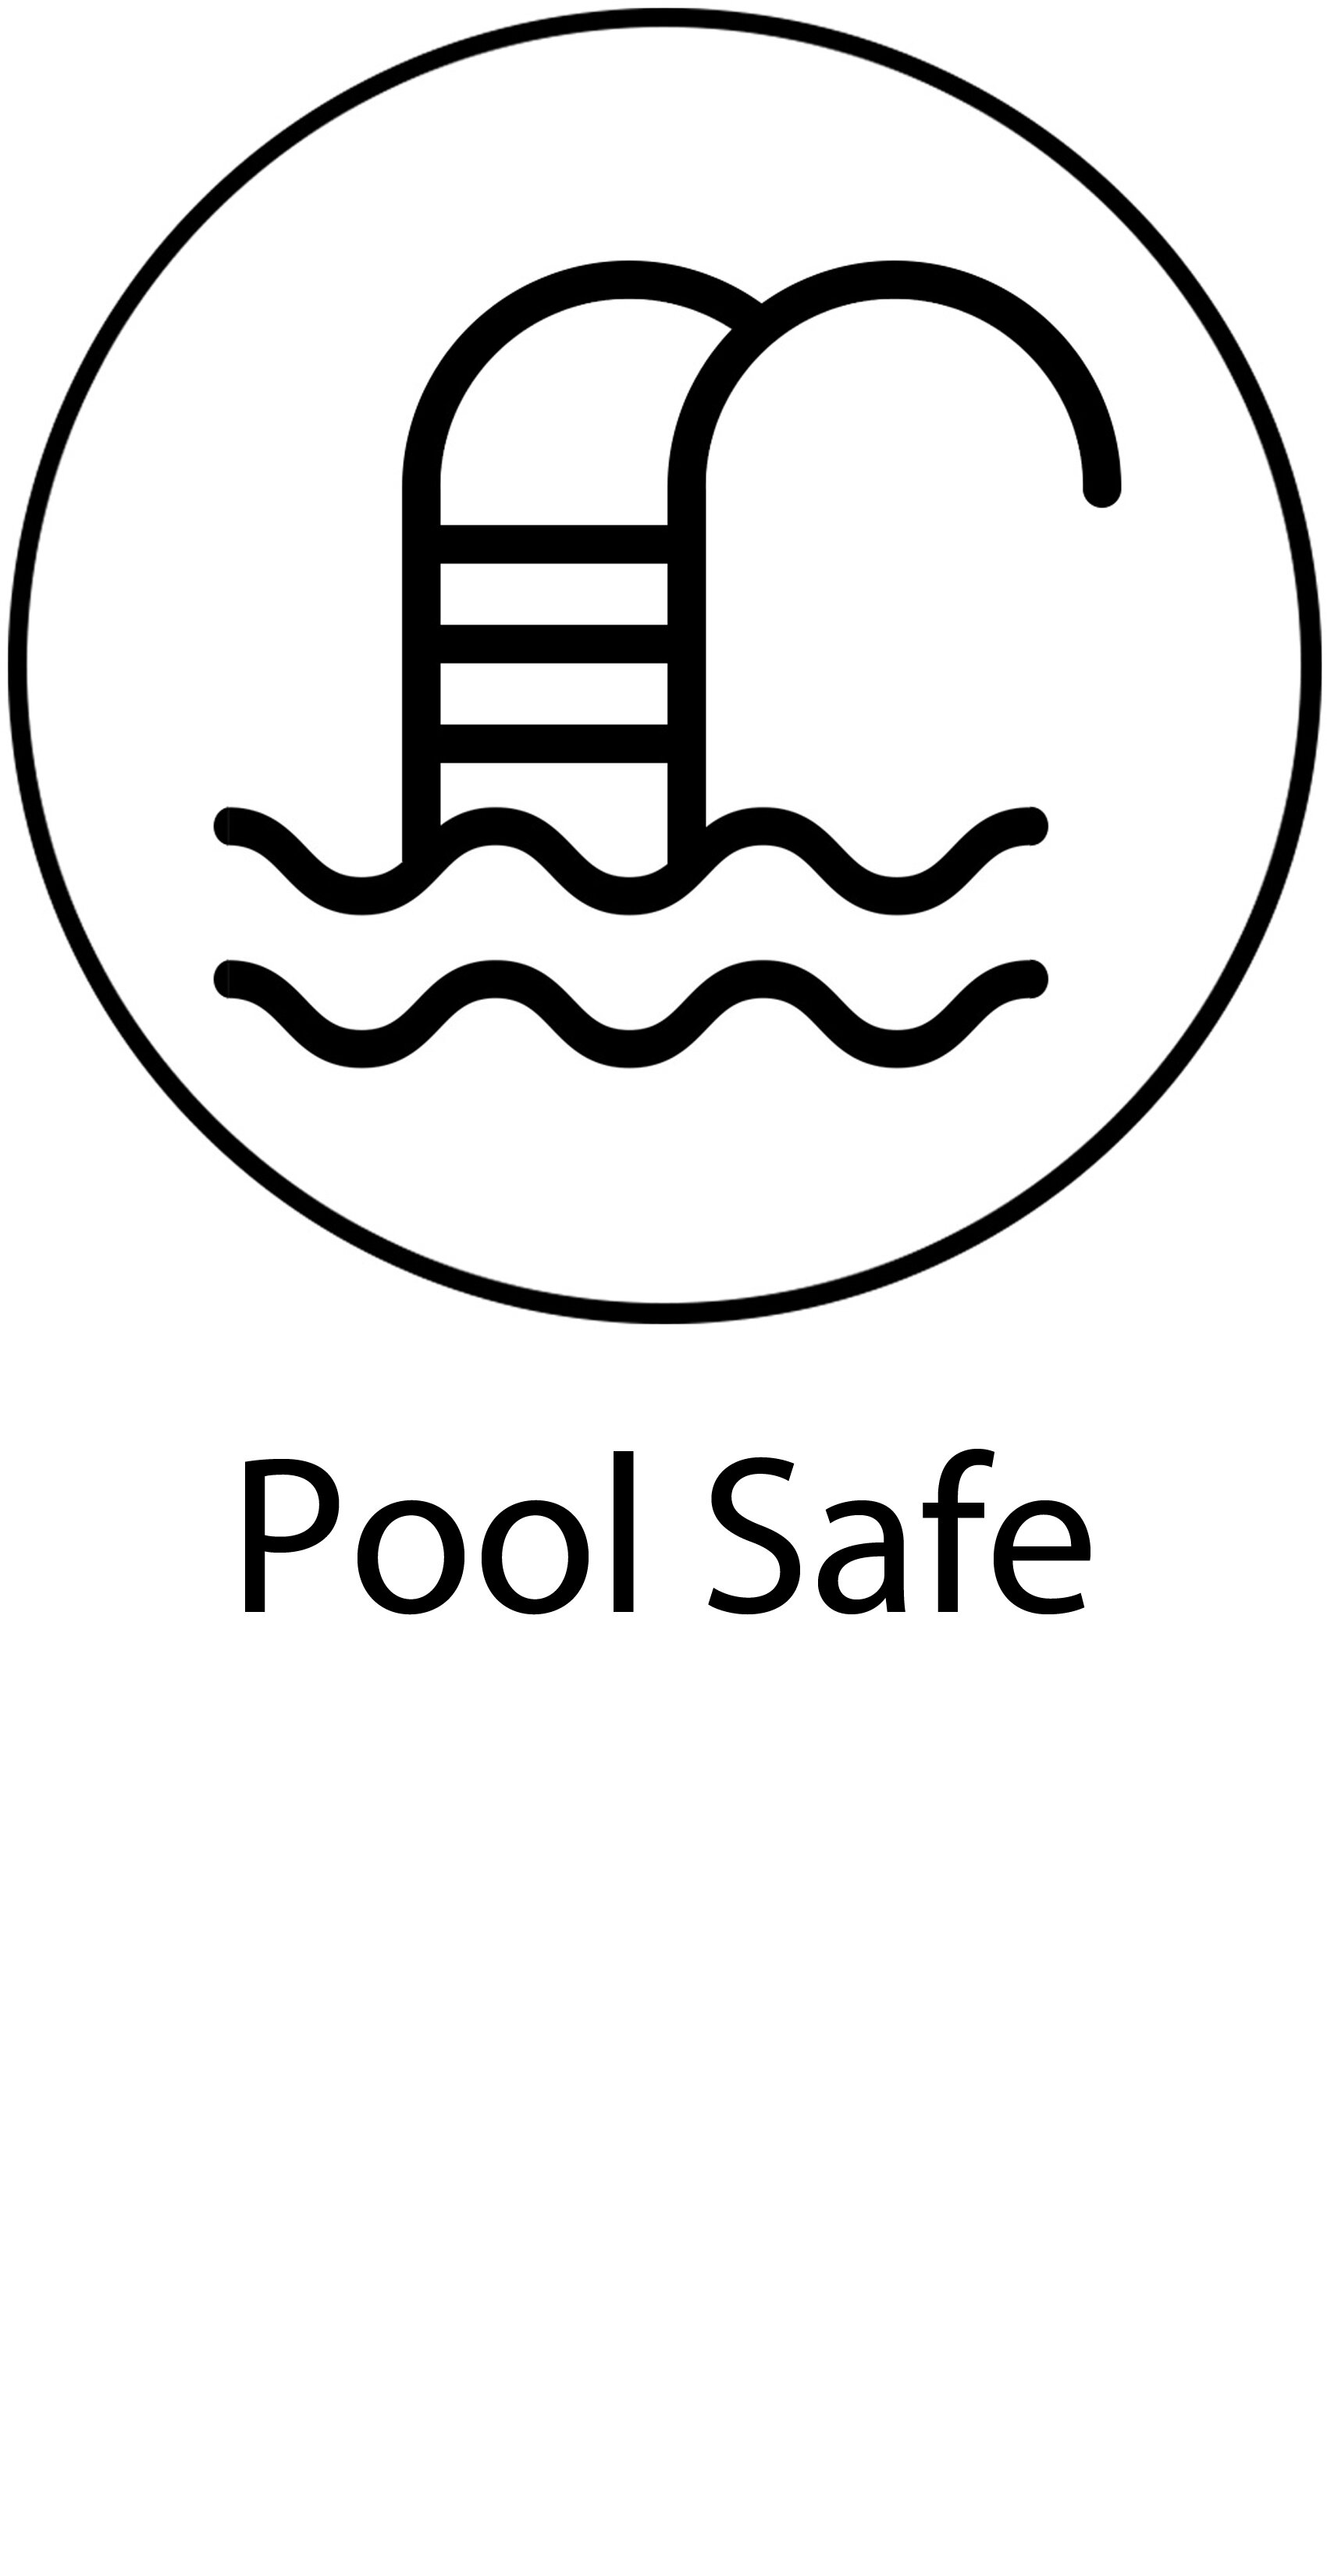 07 Pool Safe.jpg